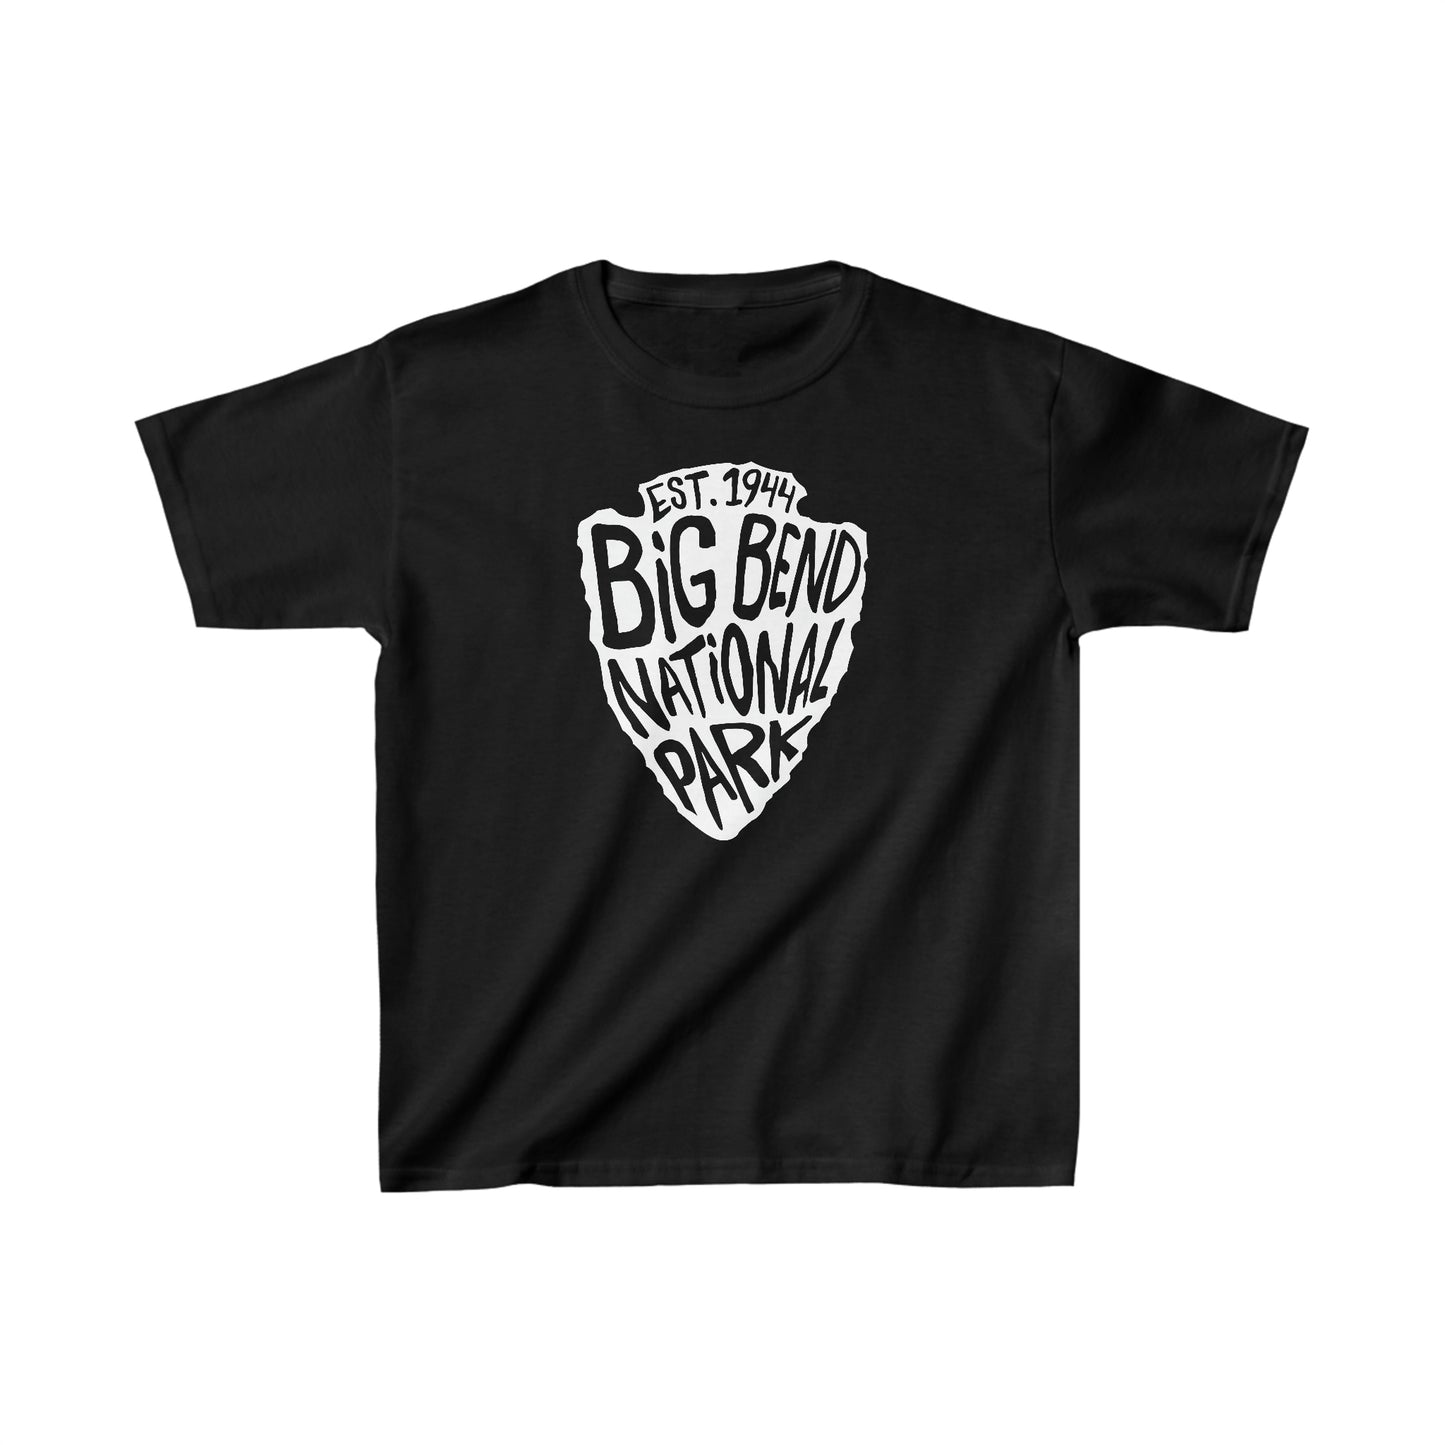 Big Bend National Park Child T-Shirt - Arrowhead Design